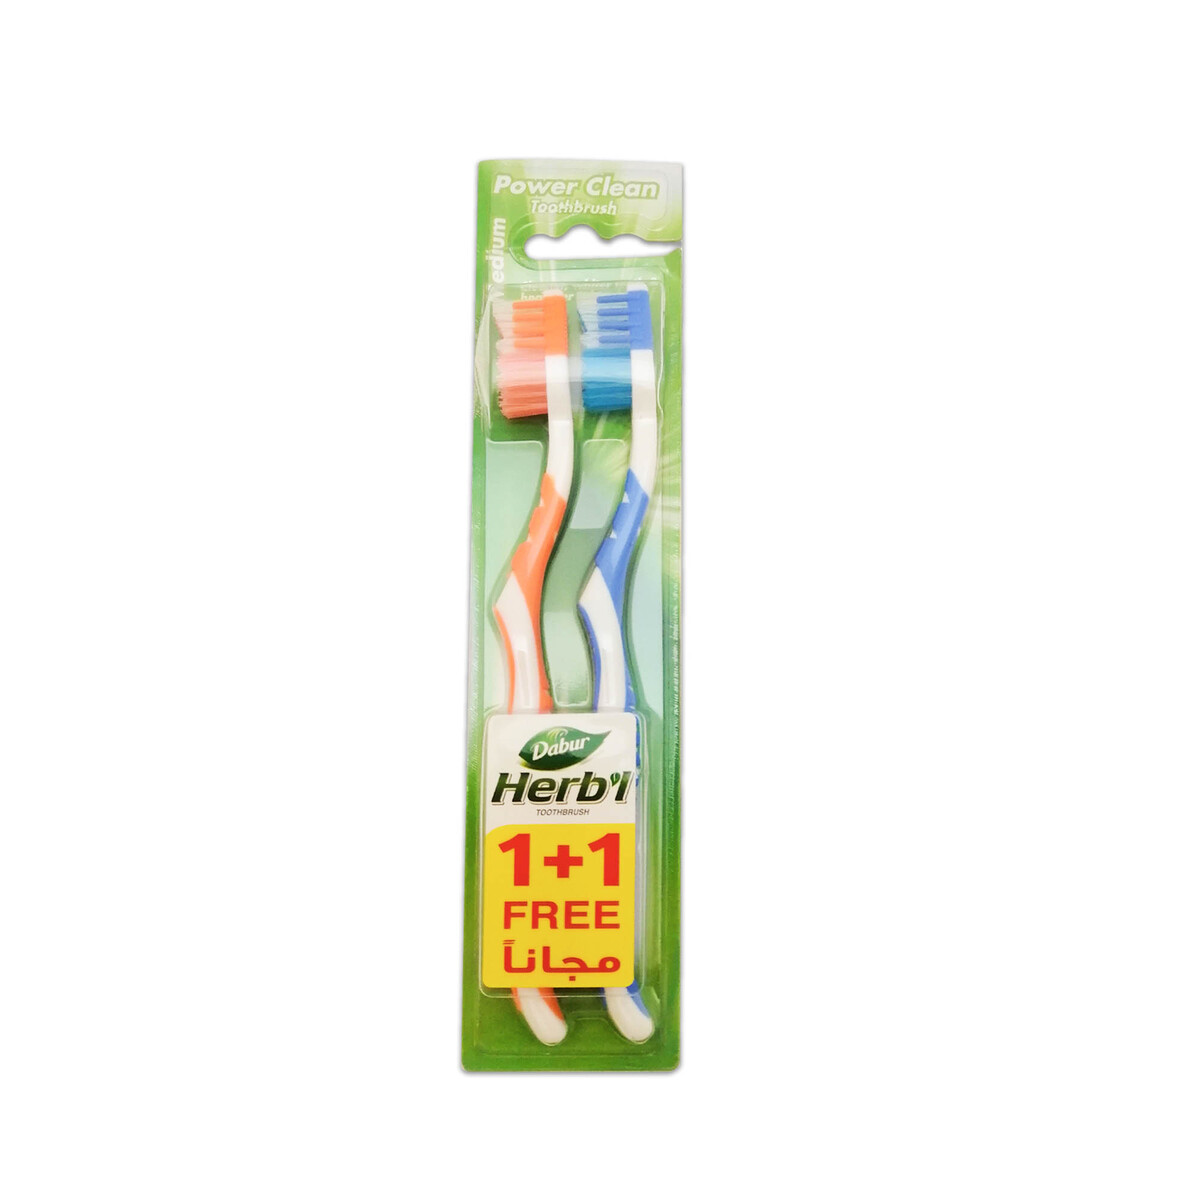 Herb'l POWER CLEAN Toothbrush MEDIUM, Dabur (Хербл ПАУЭР КЛИН зубная щётка СРЕДНЕЙ ЖЁСТКОСТИ, Дабур), разные цвета, 1 шт. + 1 шт. в подарок.